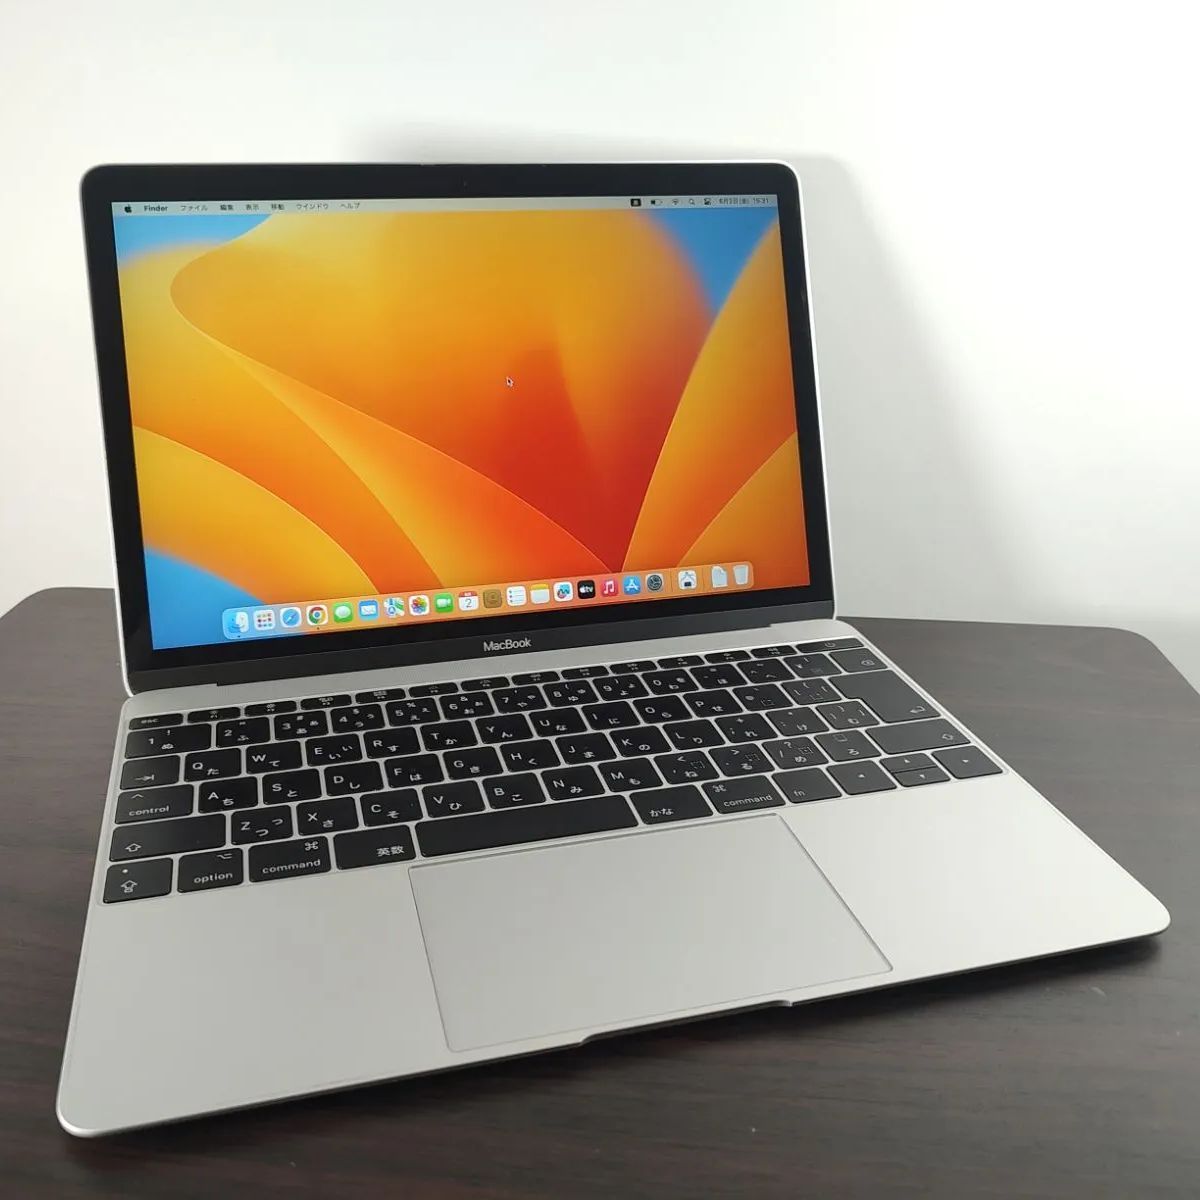 APPLE MacBook 12inch ssd256GB